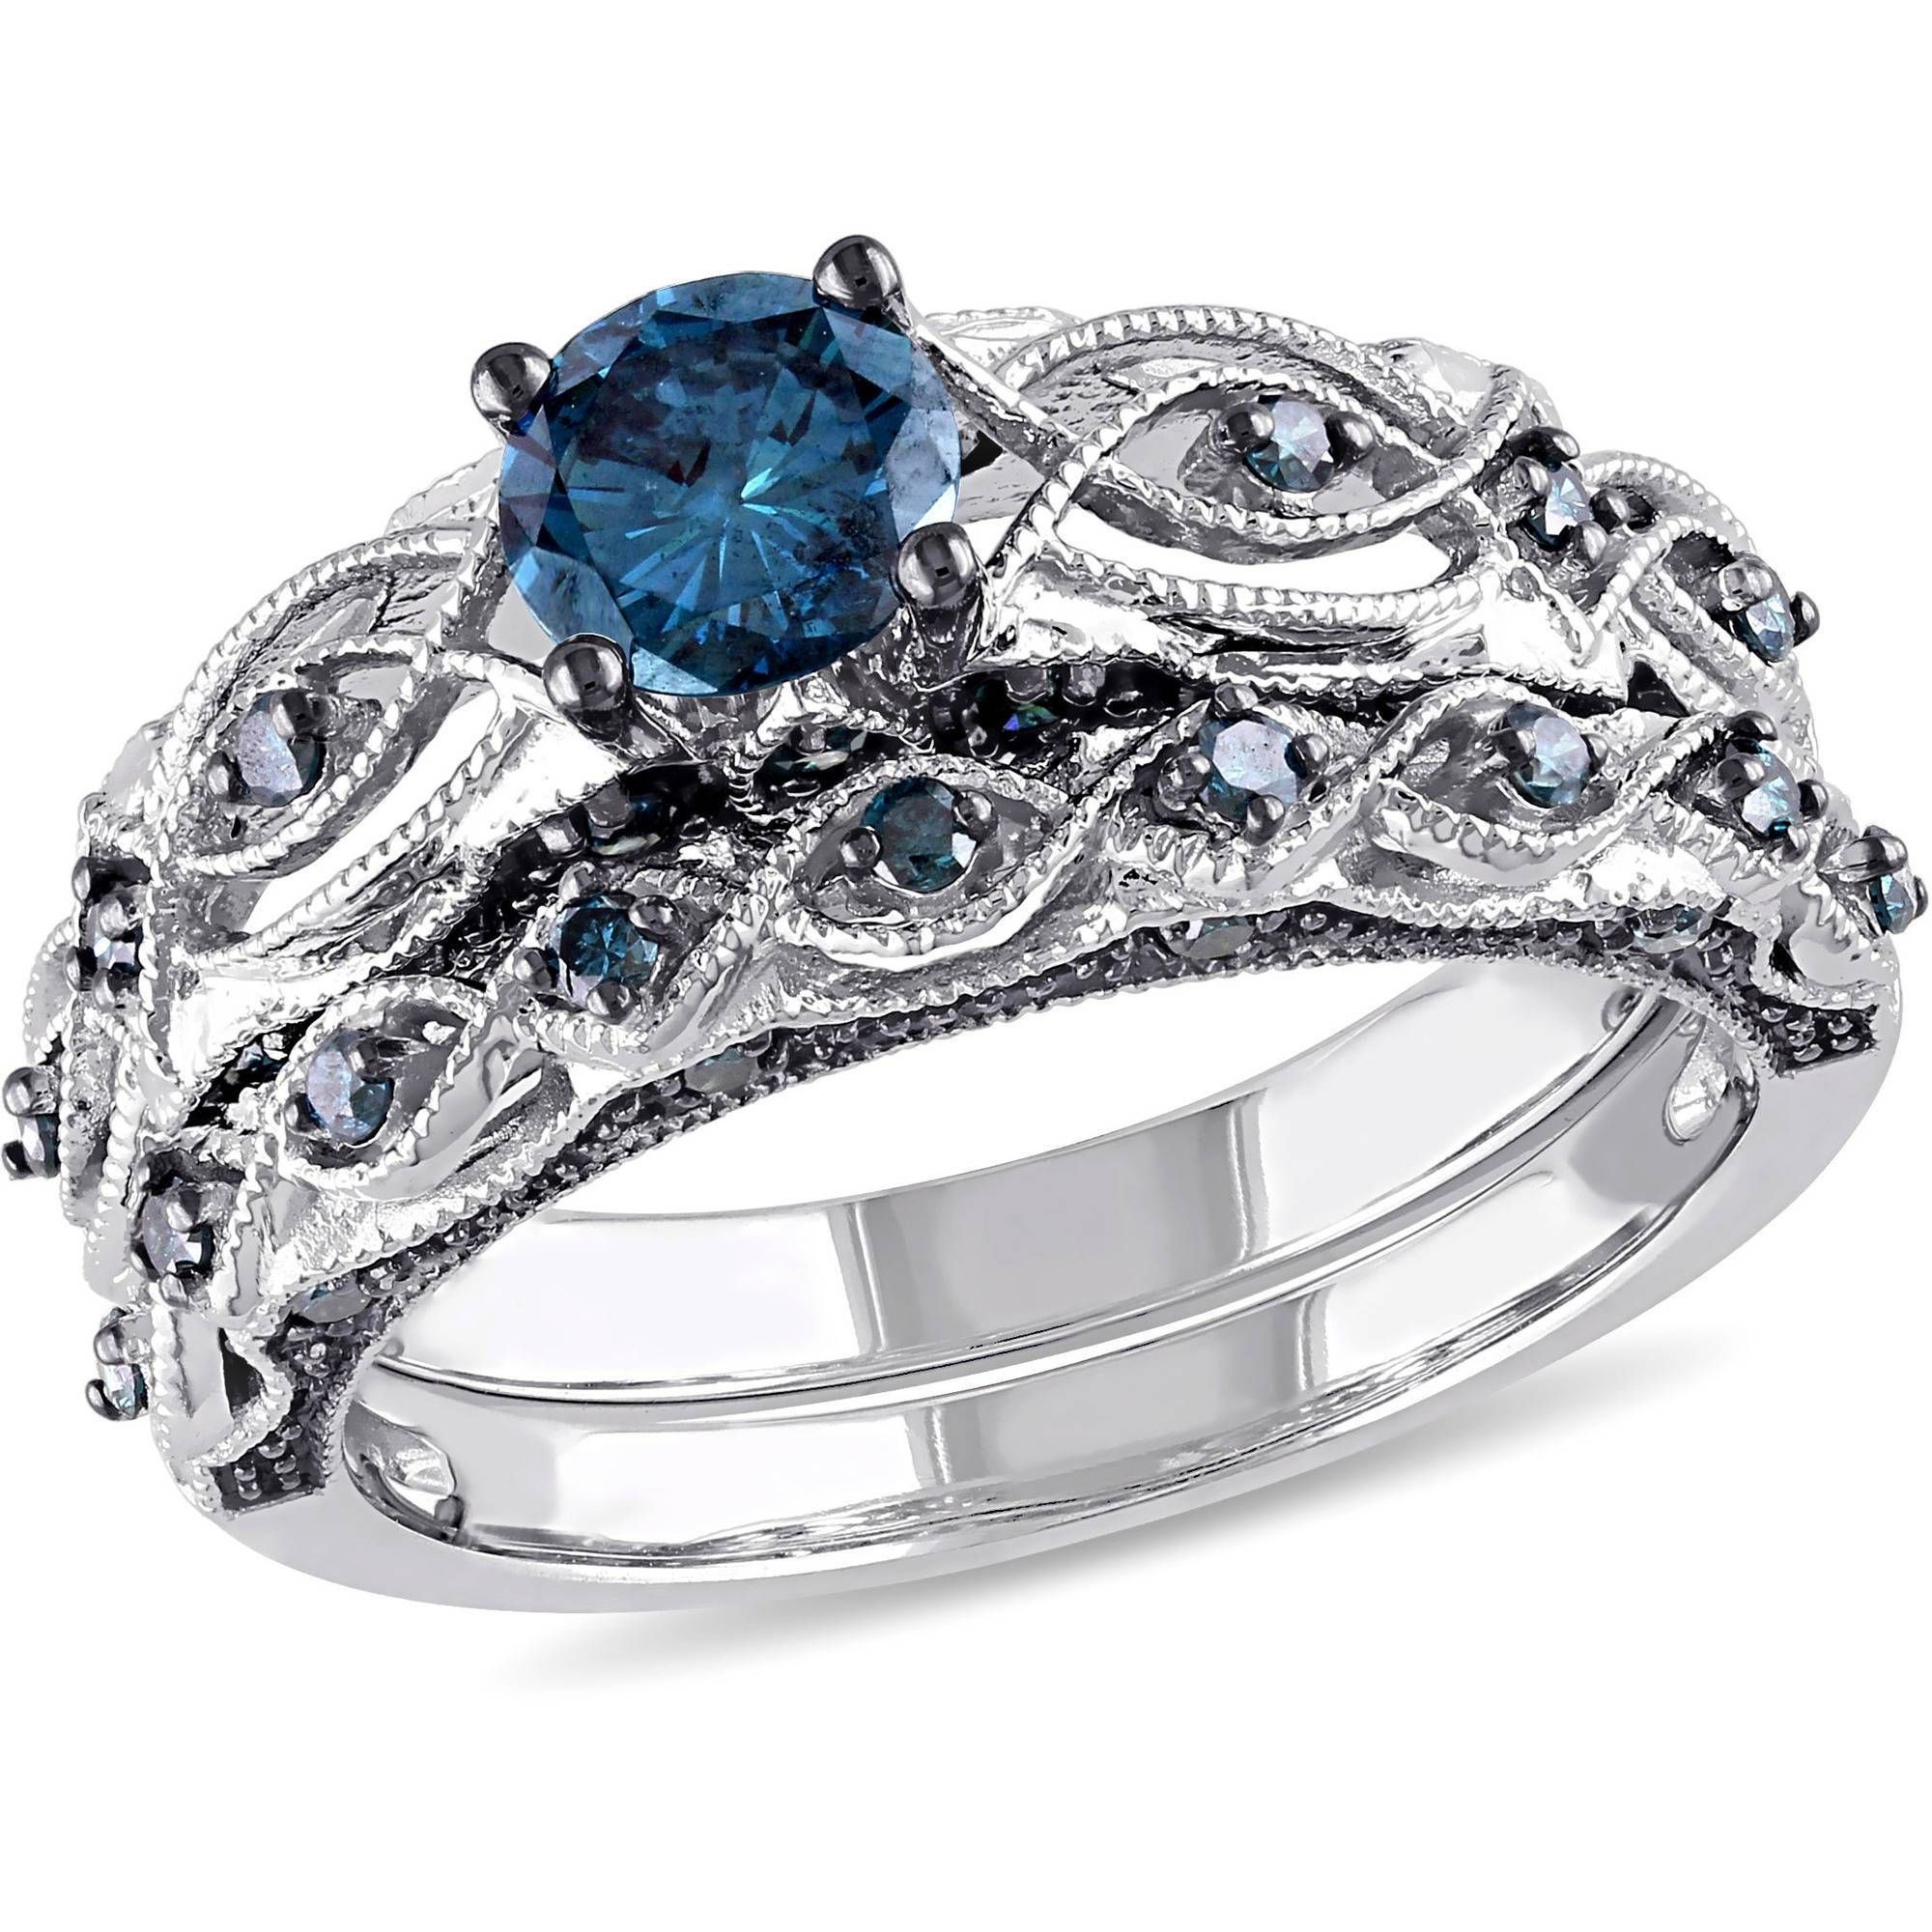 2021 Best of Blue Diamond Wedding Rings Sets